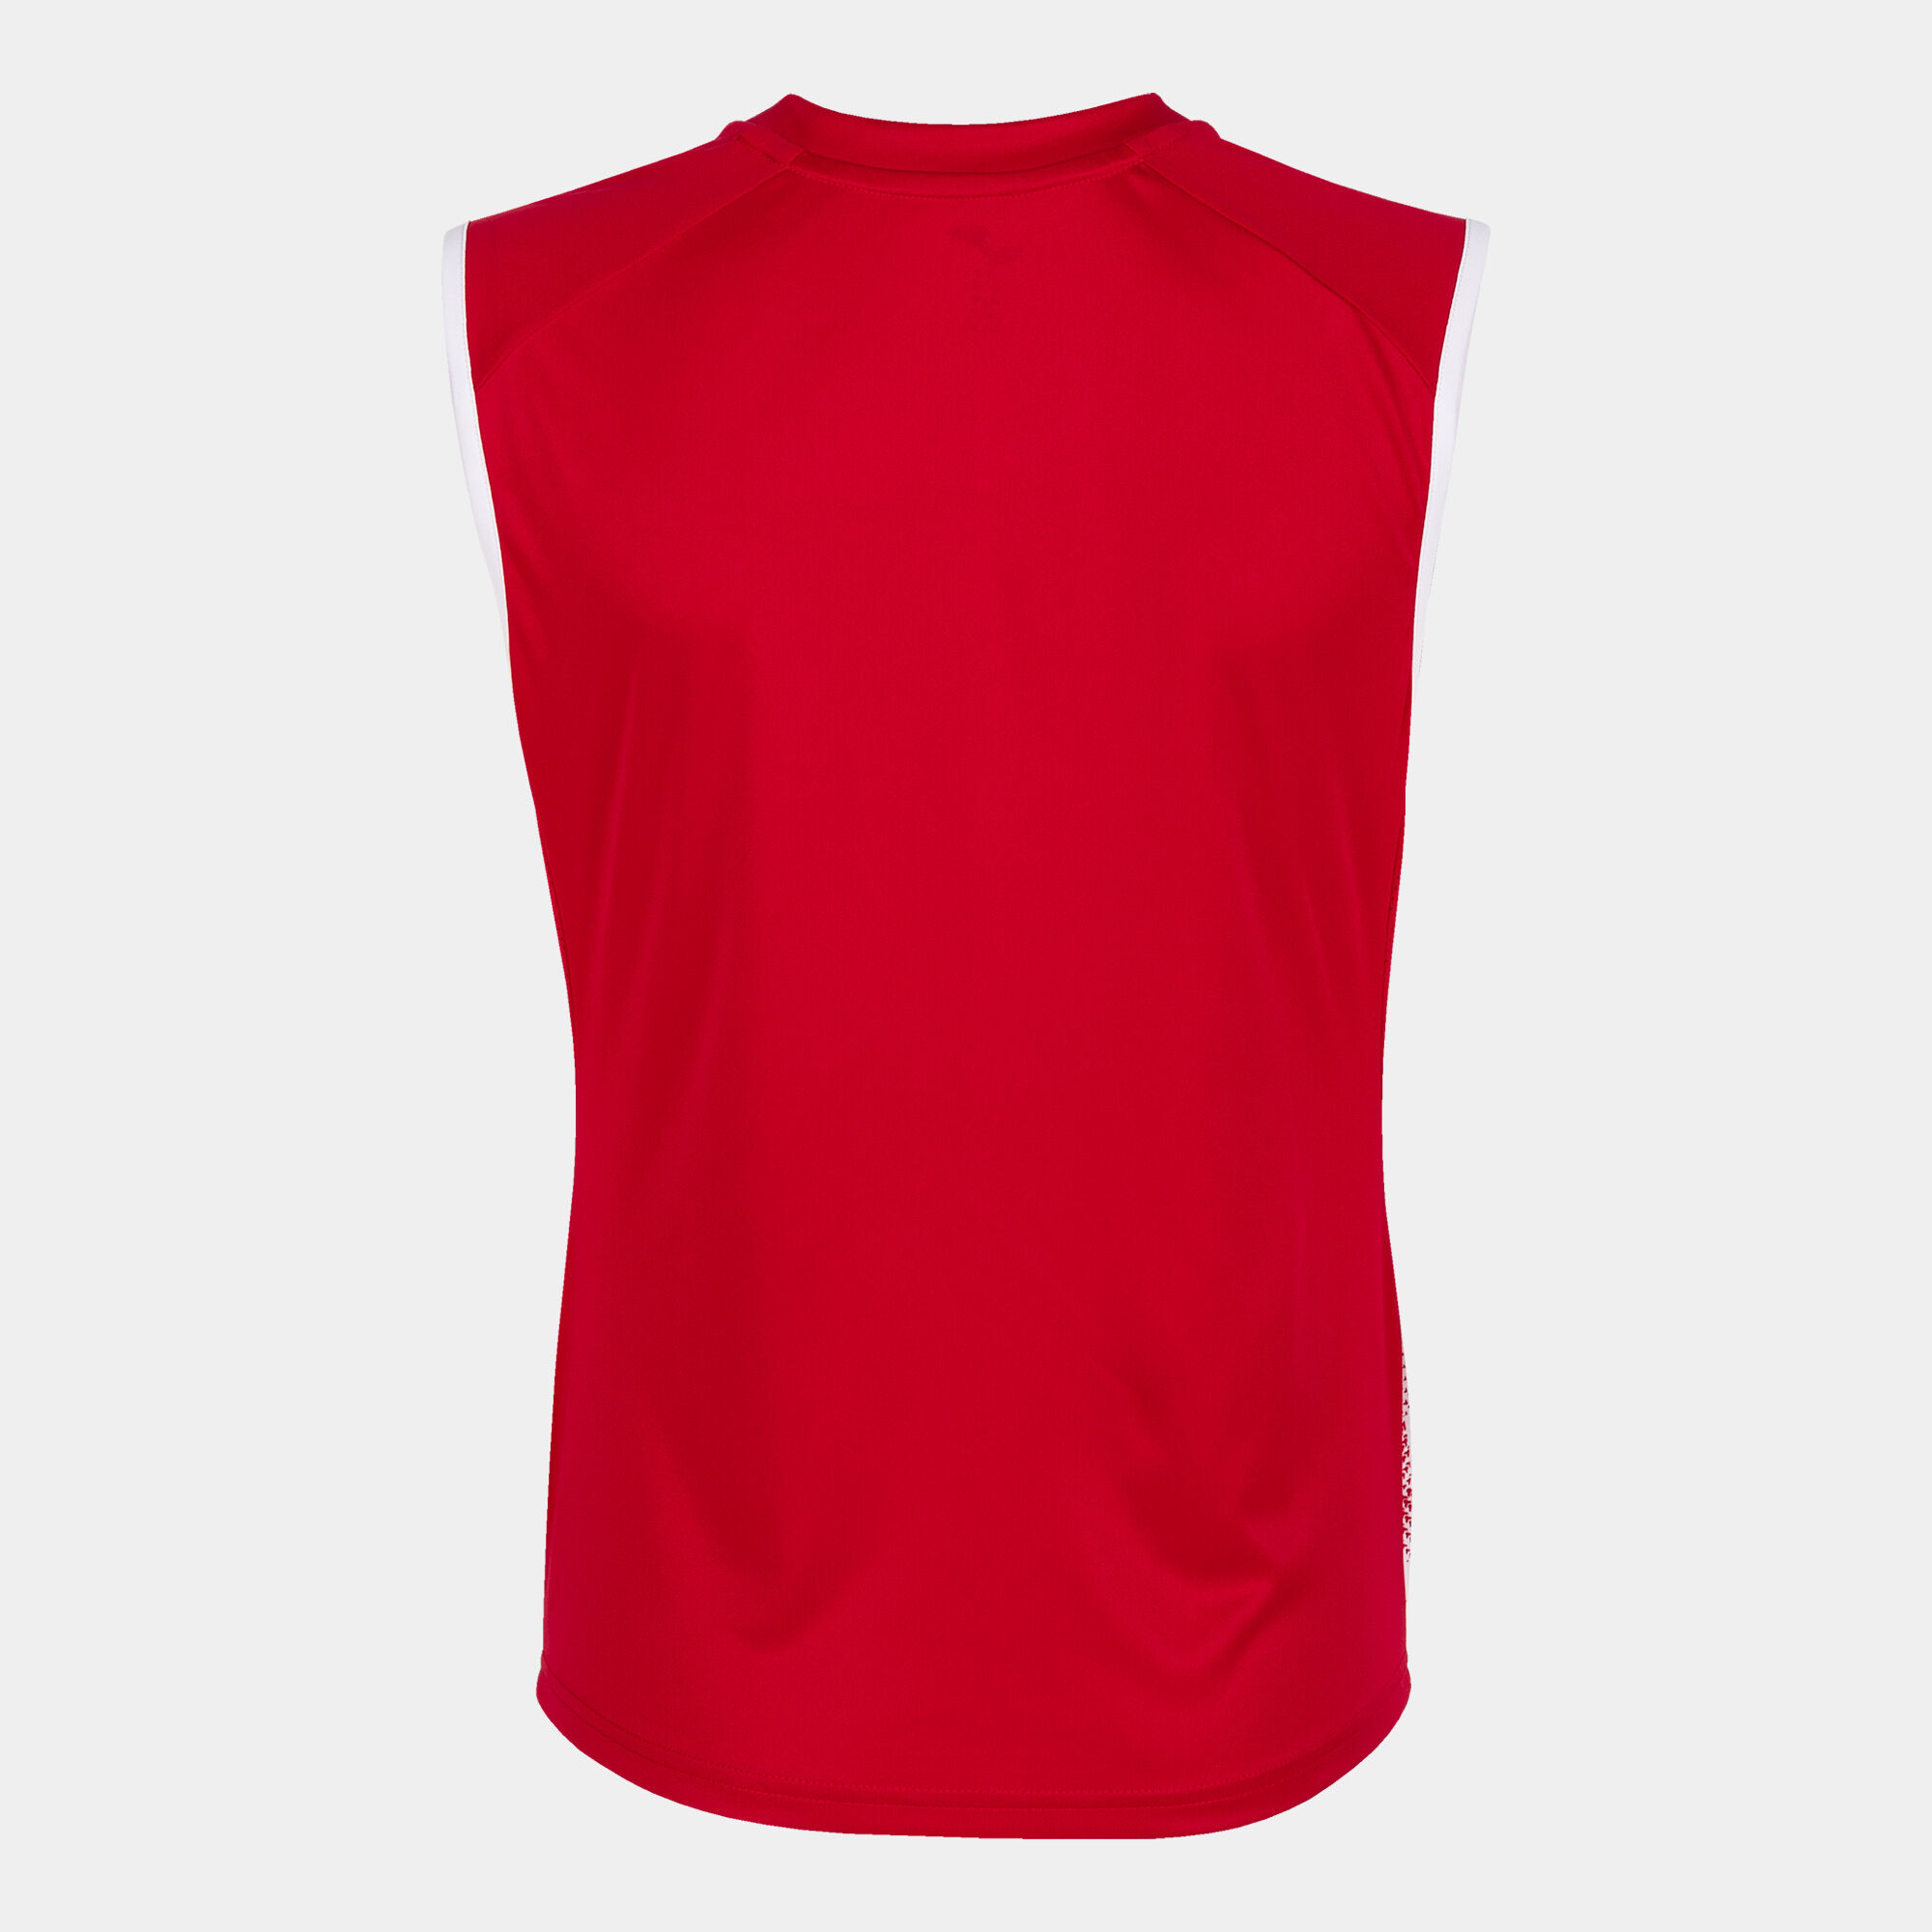 Camiseta sin mangas mujer Supernova III rojo blanco